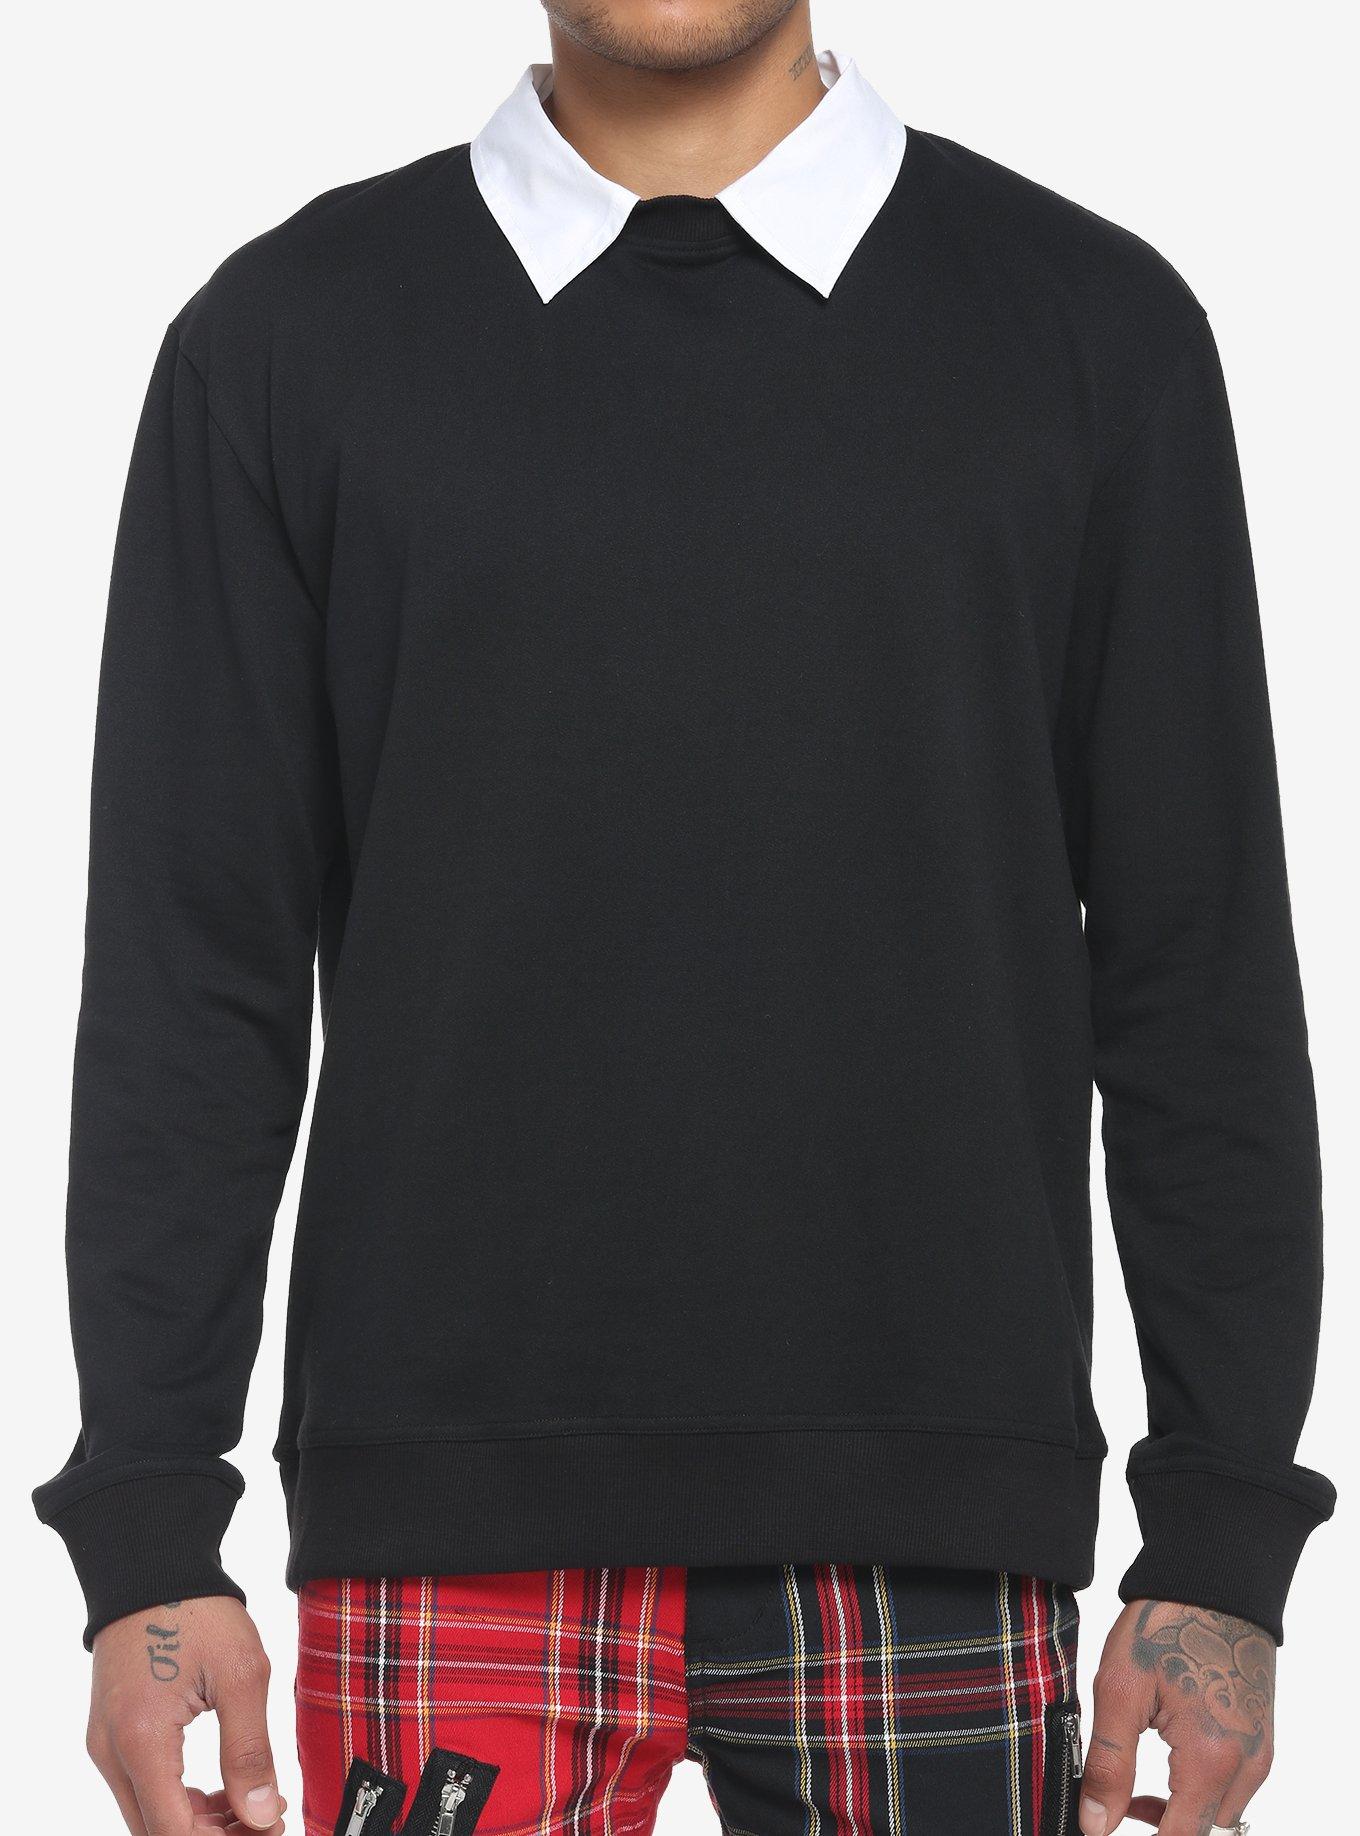 Black & White Collar Pullover Sweater